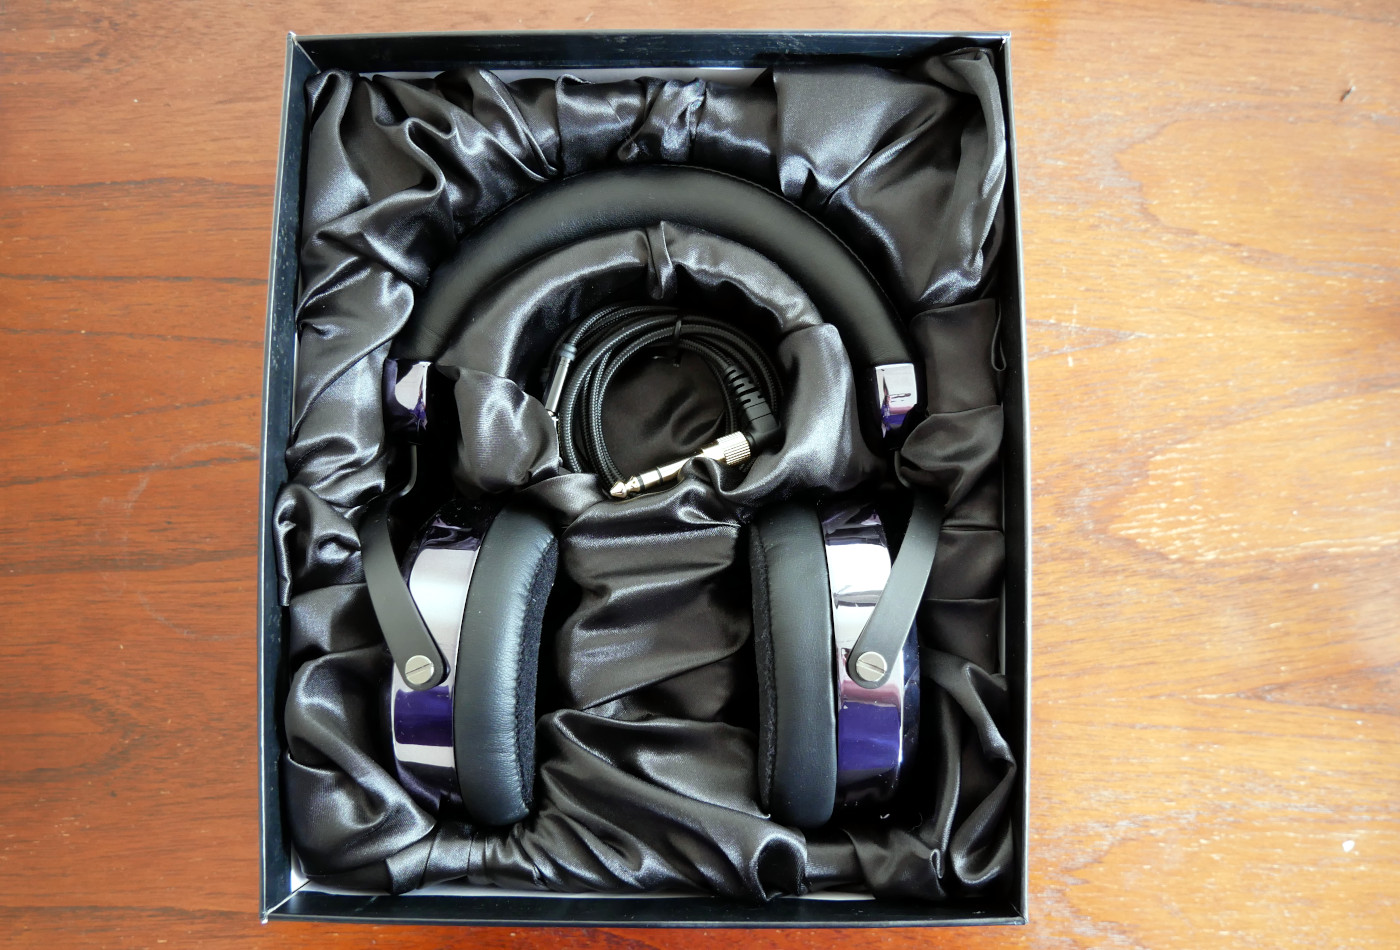 HiFiMan HE-560 V2 Premium Planar Magnetic Headphones #HE560V2